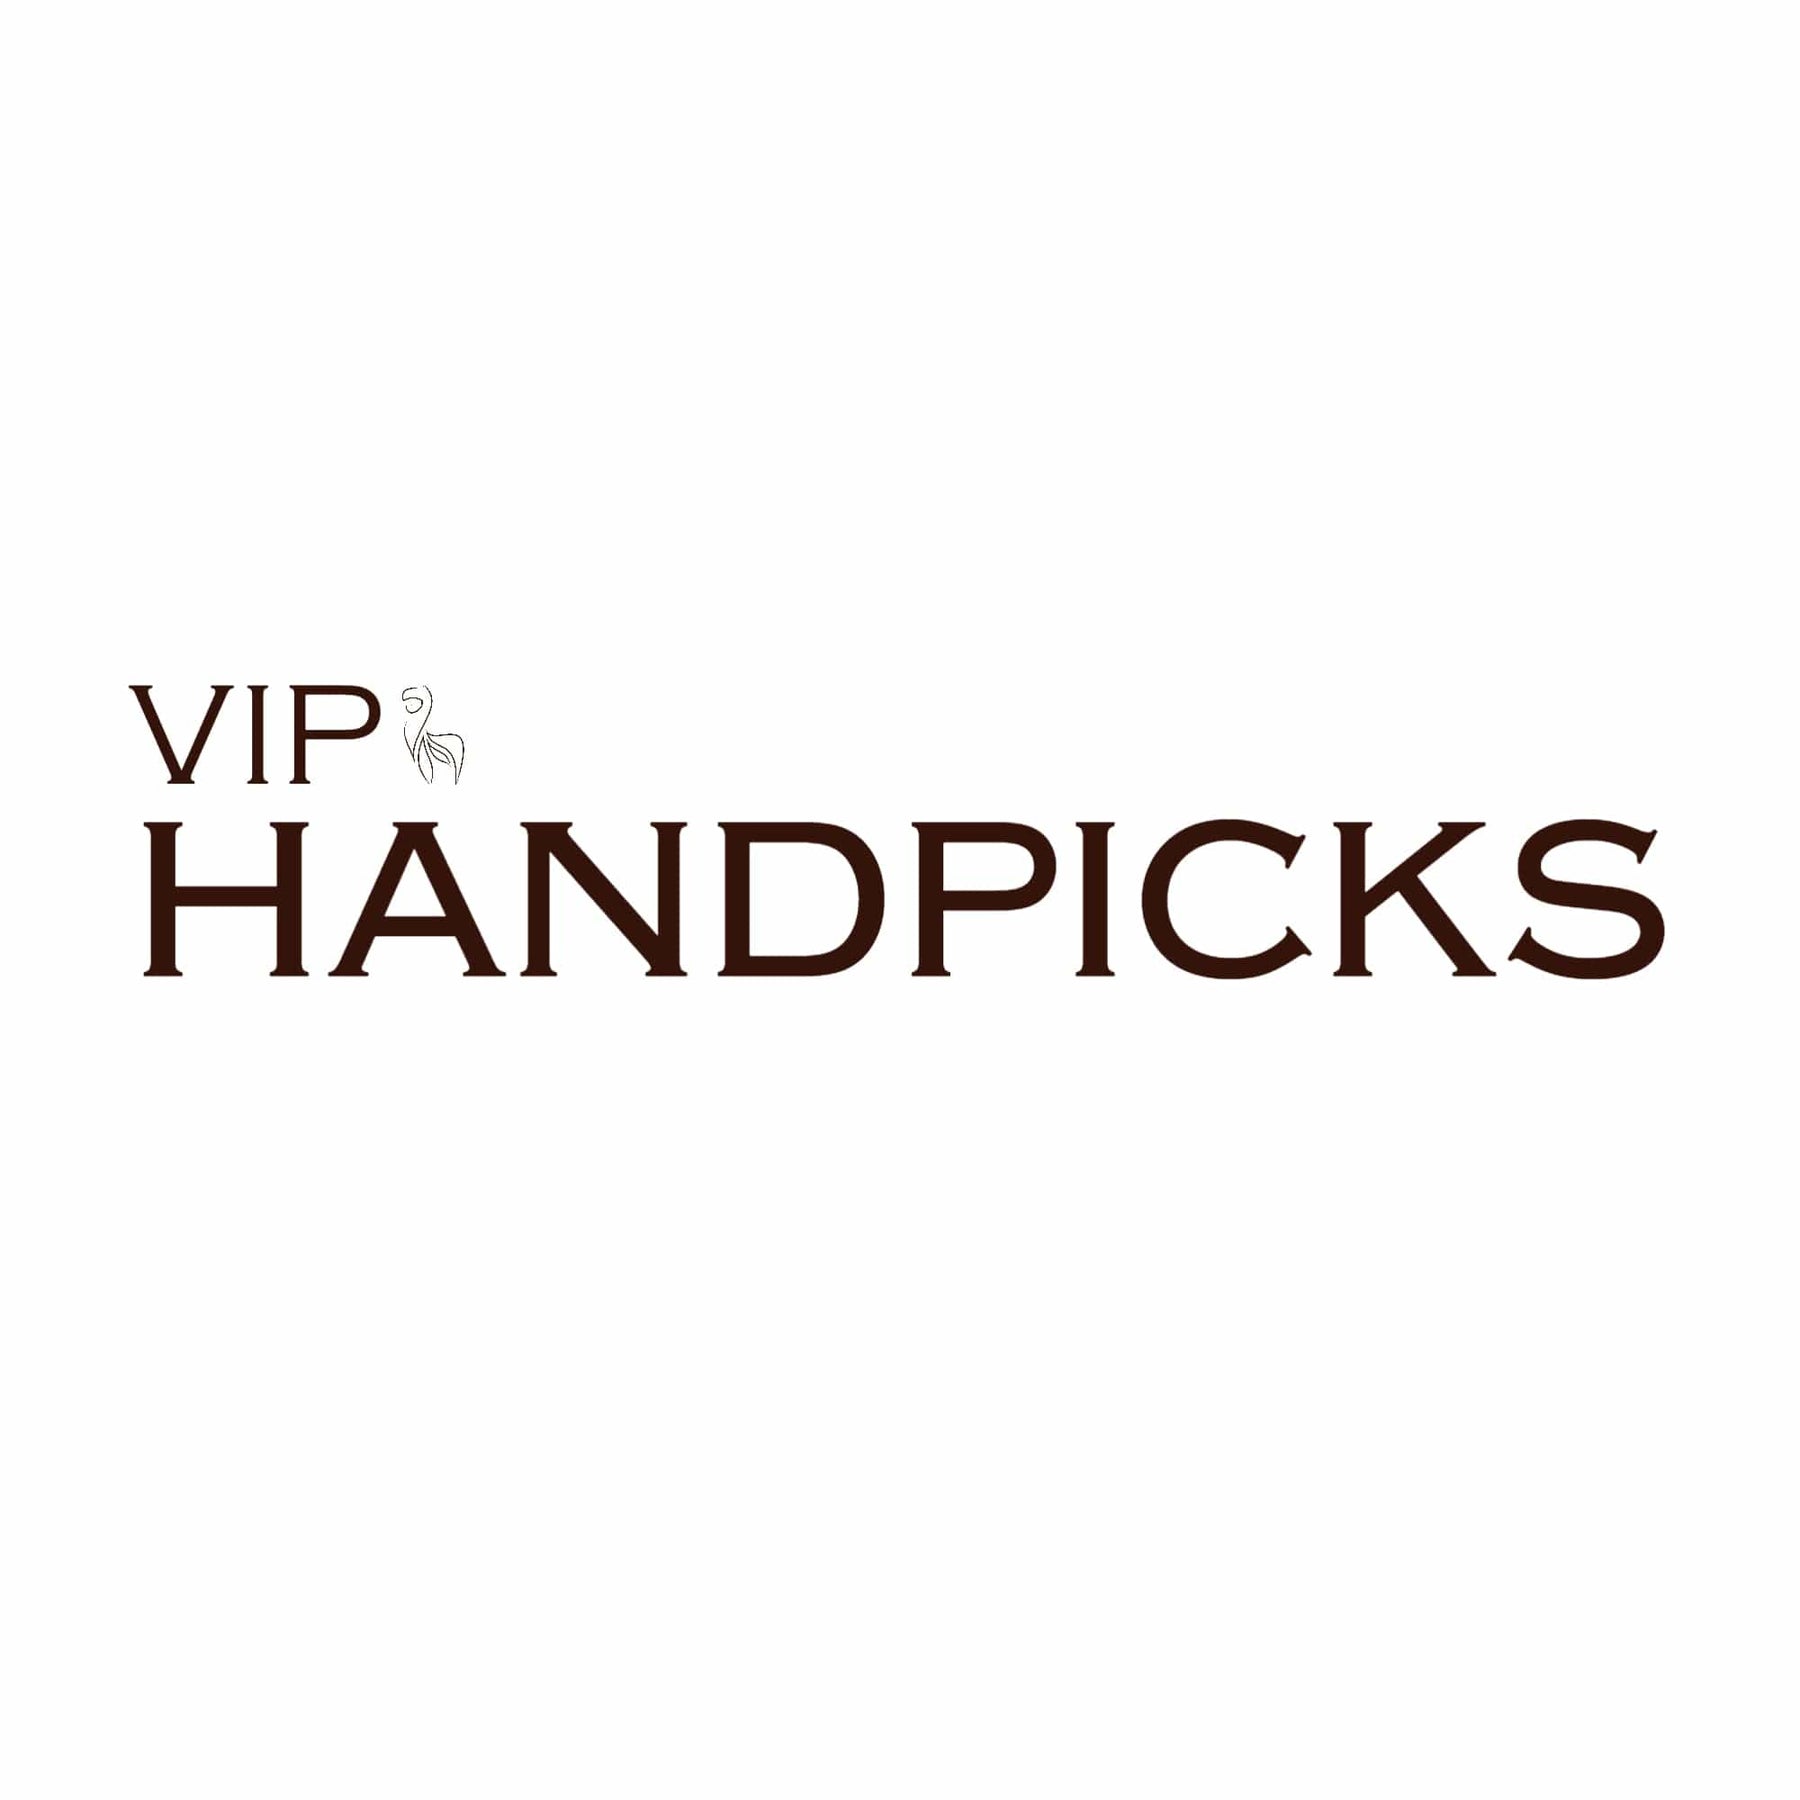 VIP Handpicks